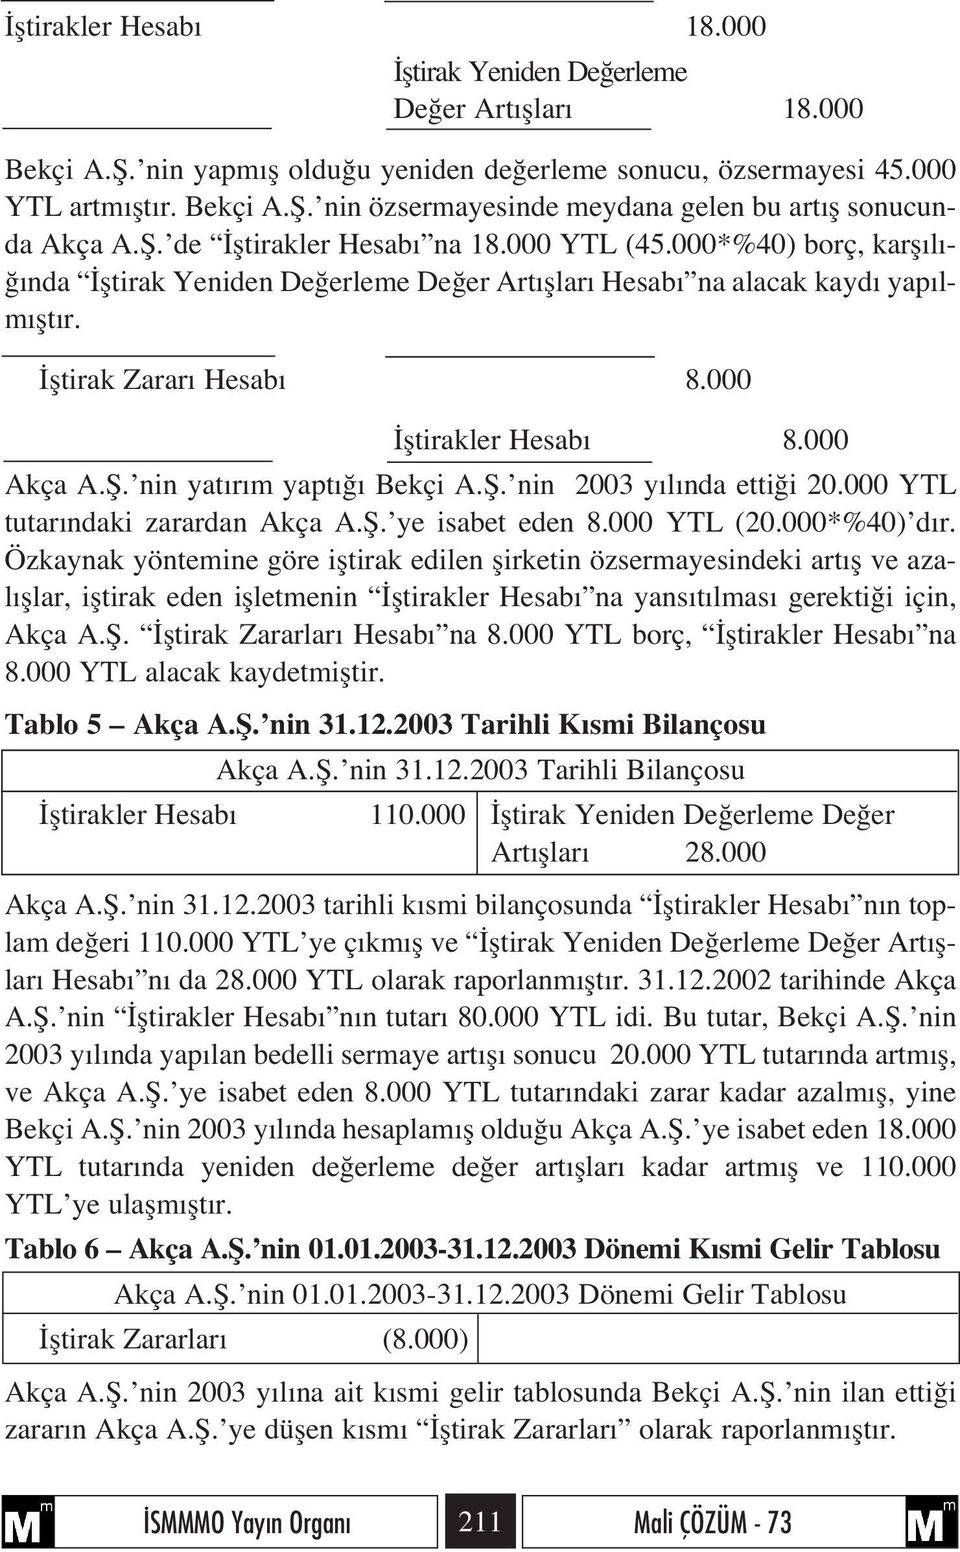 000 Akça A.fi. nin yat r m yapt Bekçi A.fi. nin 2003 y l nda etti i 20.000 YTL tutar ndaki zarardan Akça A.fi. ye isabet eden 8.000 YTL (20.000*%40) d r.